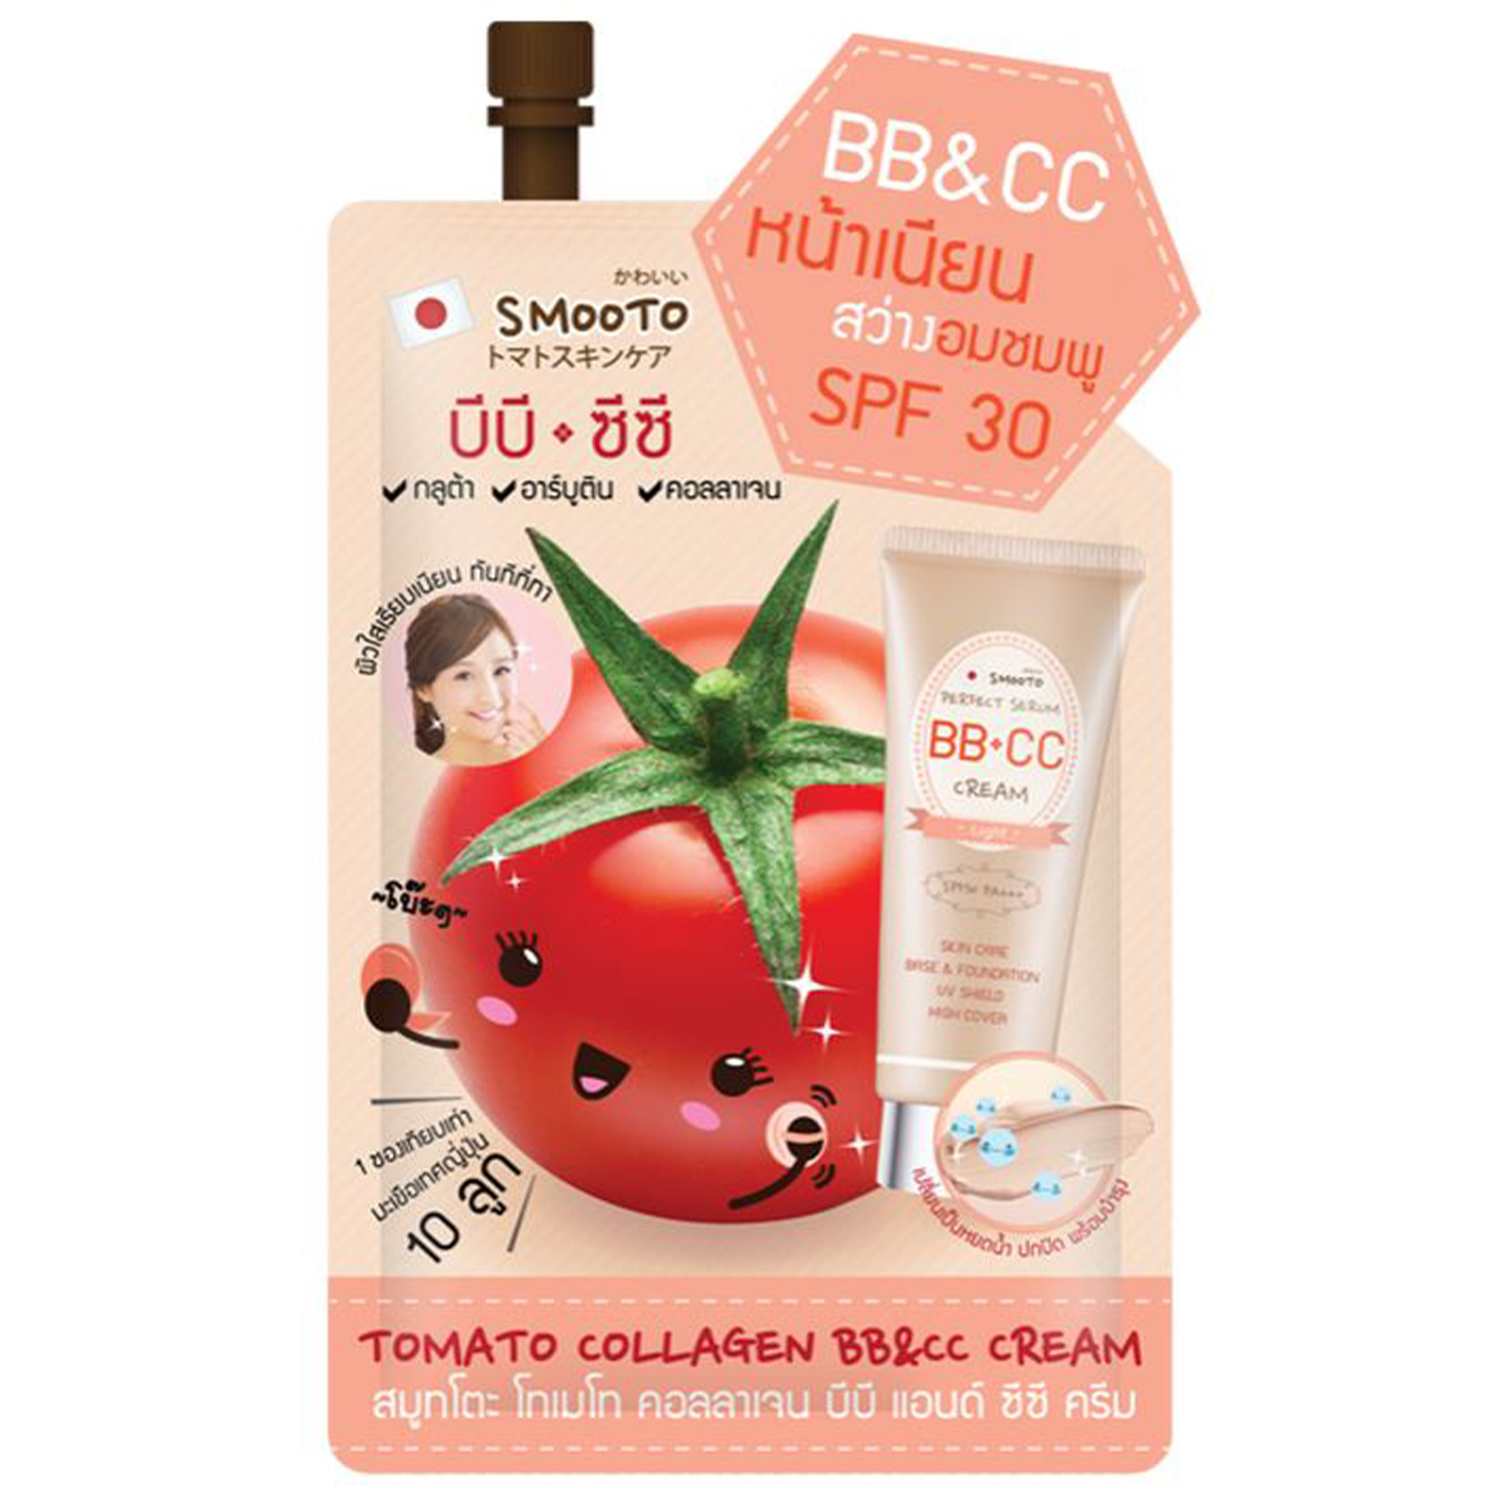 Smooto Tomato Collagen BB&CC Cream สมูทโตะ โทเมโท่ คอลลาเจน บีบี แอนด์ ซีซี ครีม (1ซอง x 10กร้ม)